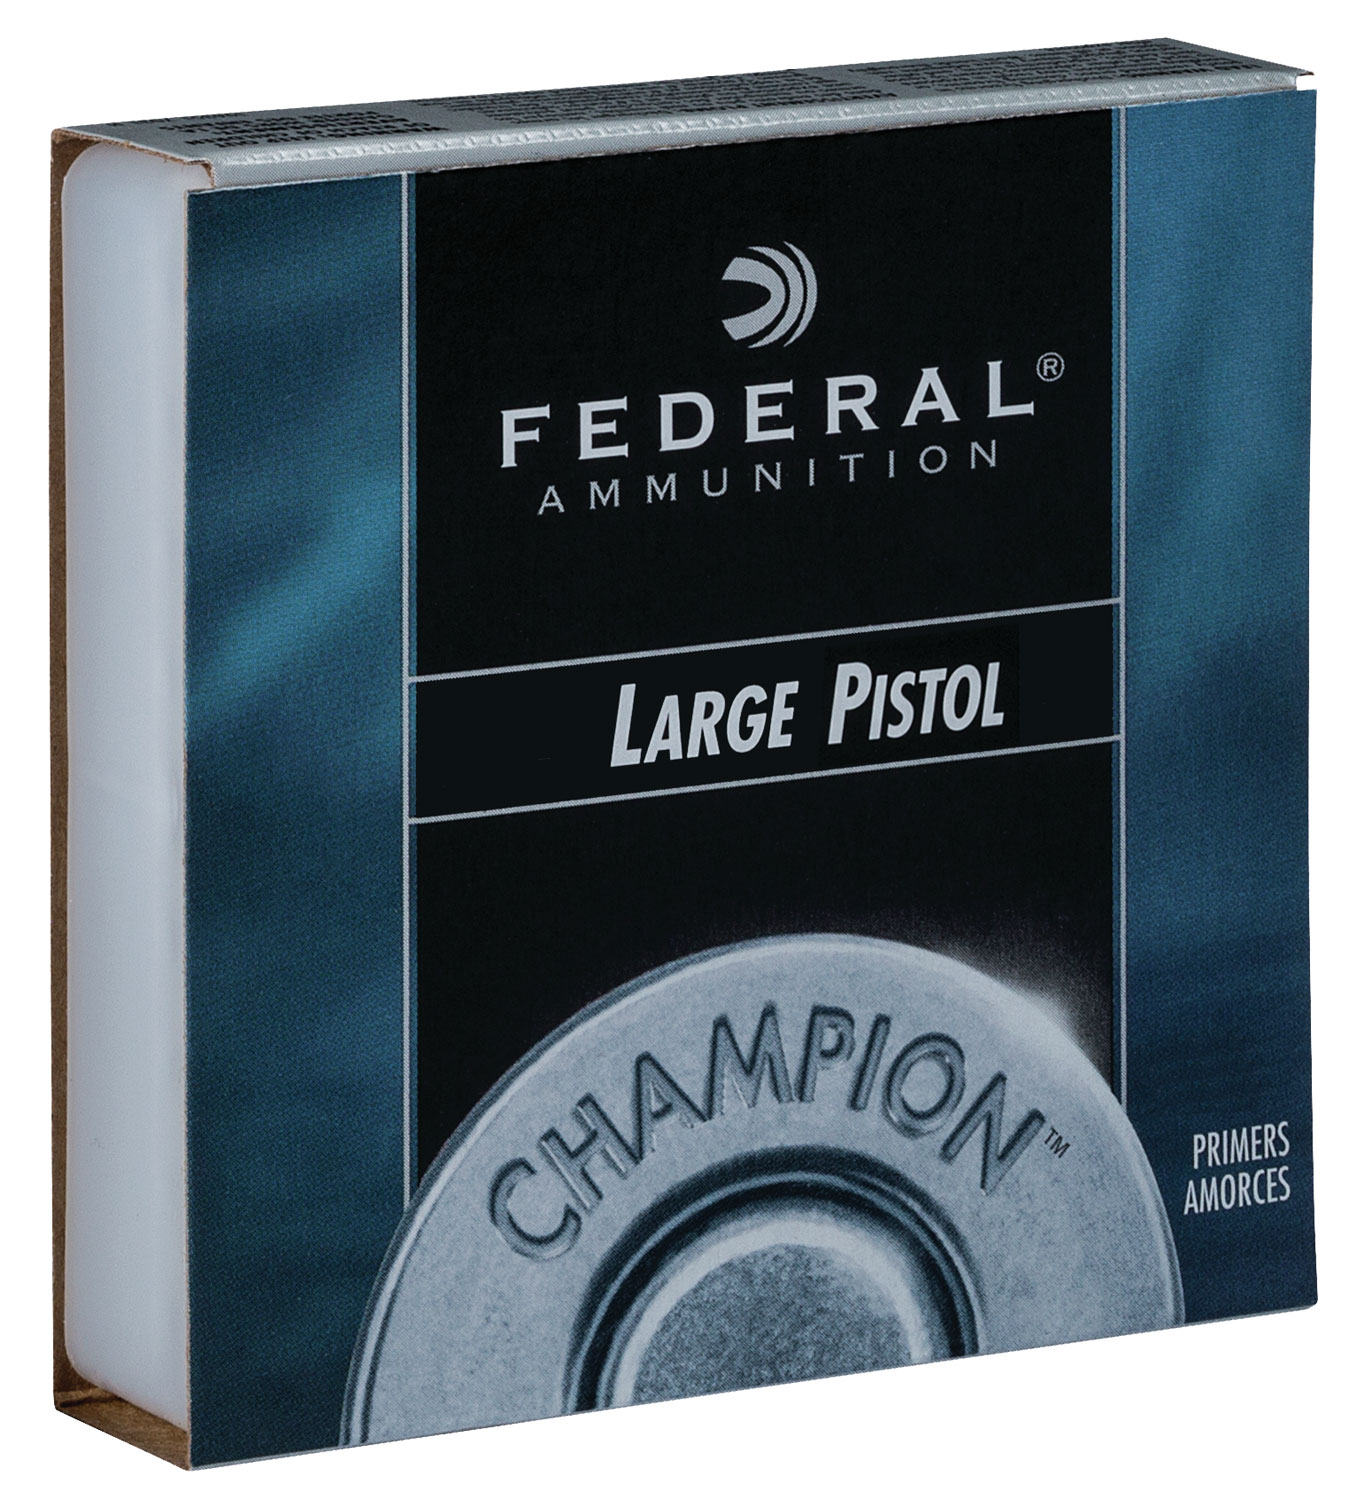 Federal 150 Champion Large Pistol Large Pistol Multi-Caliber Handgun